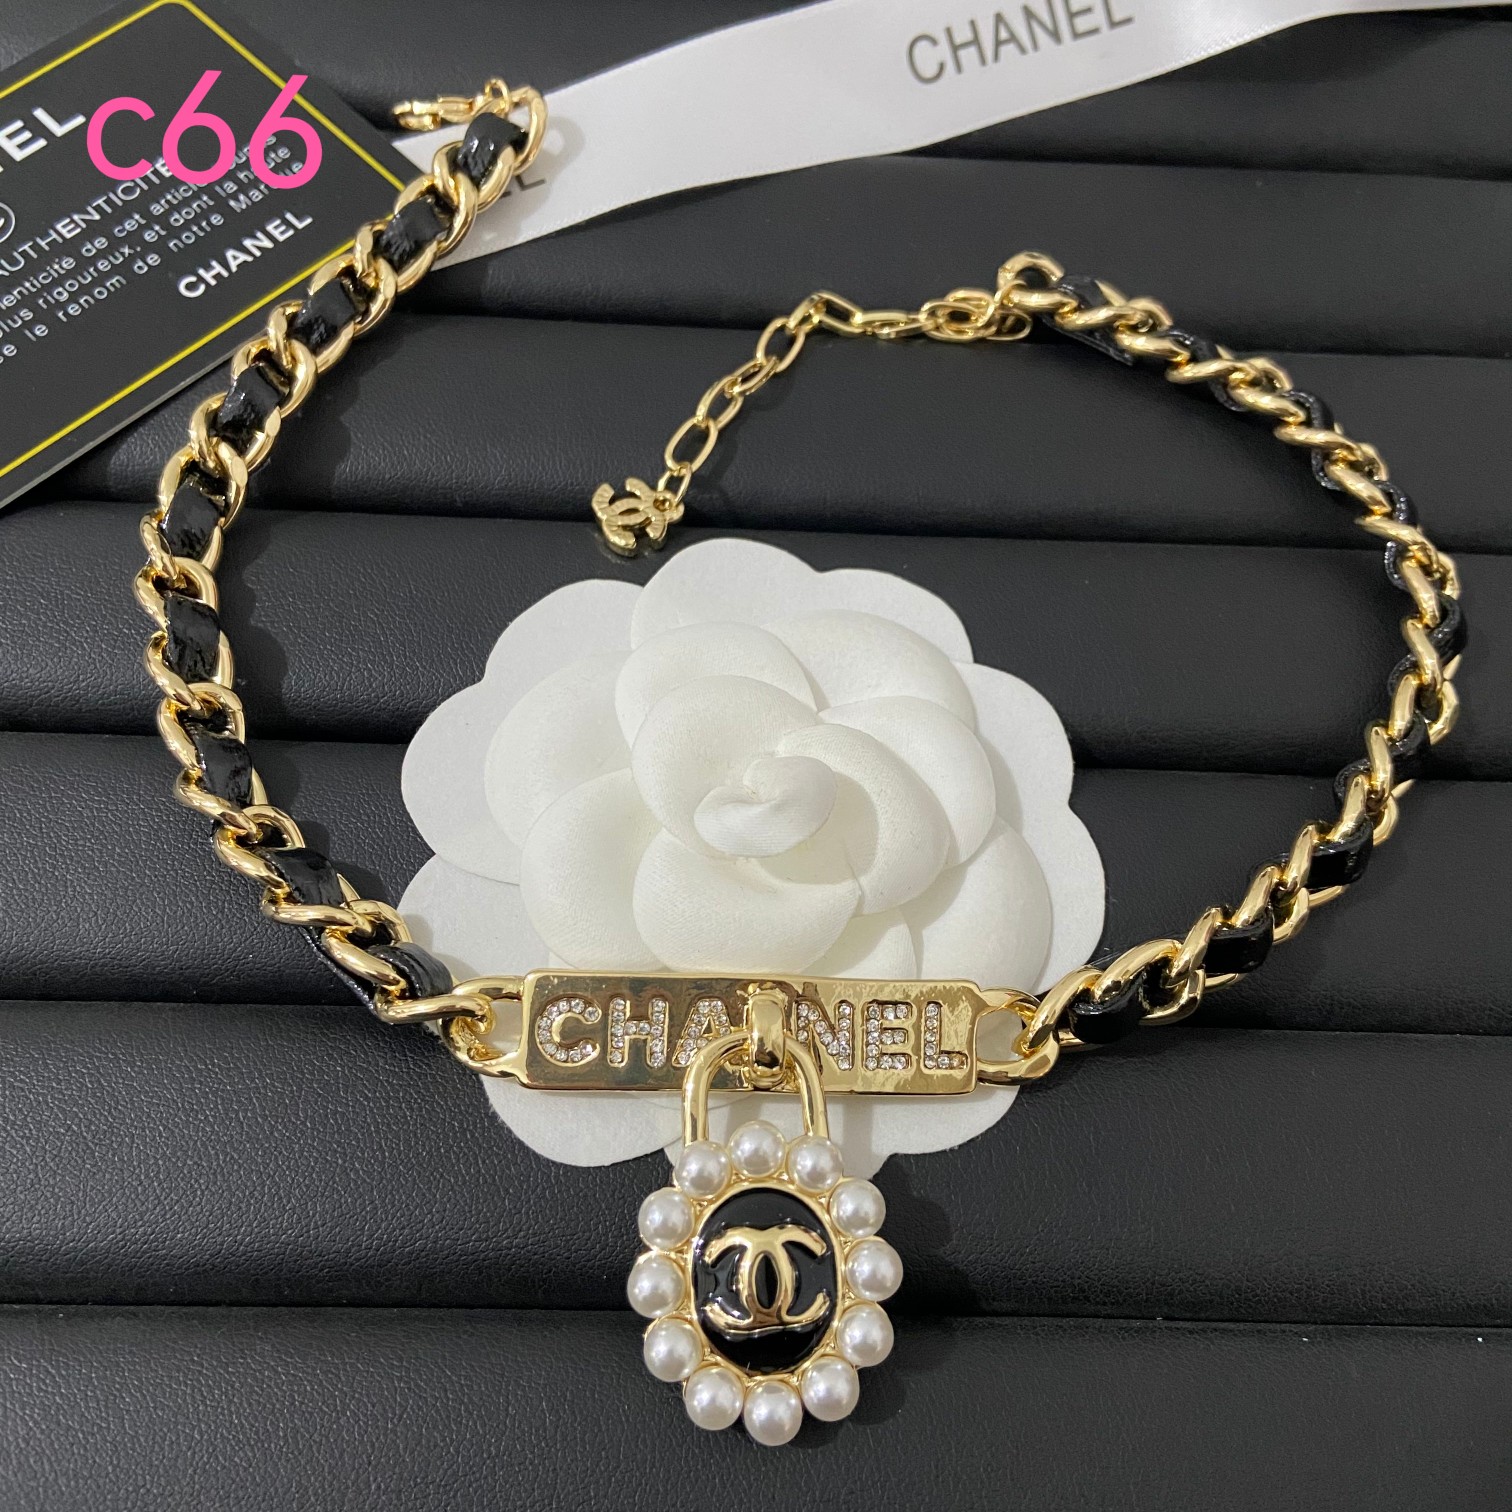 Chanel cc choker necklace 108634